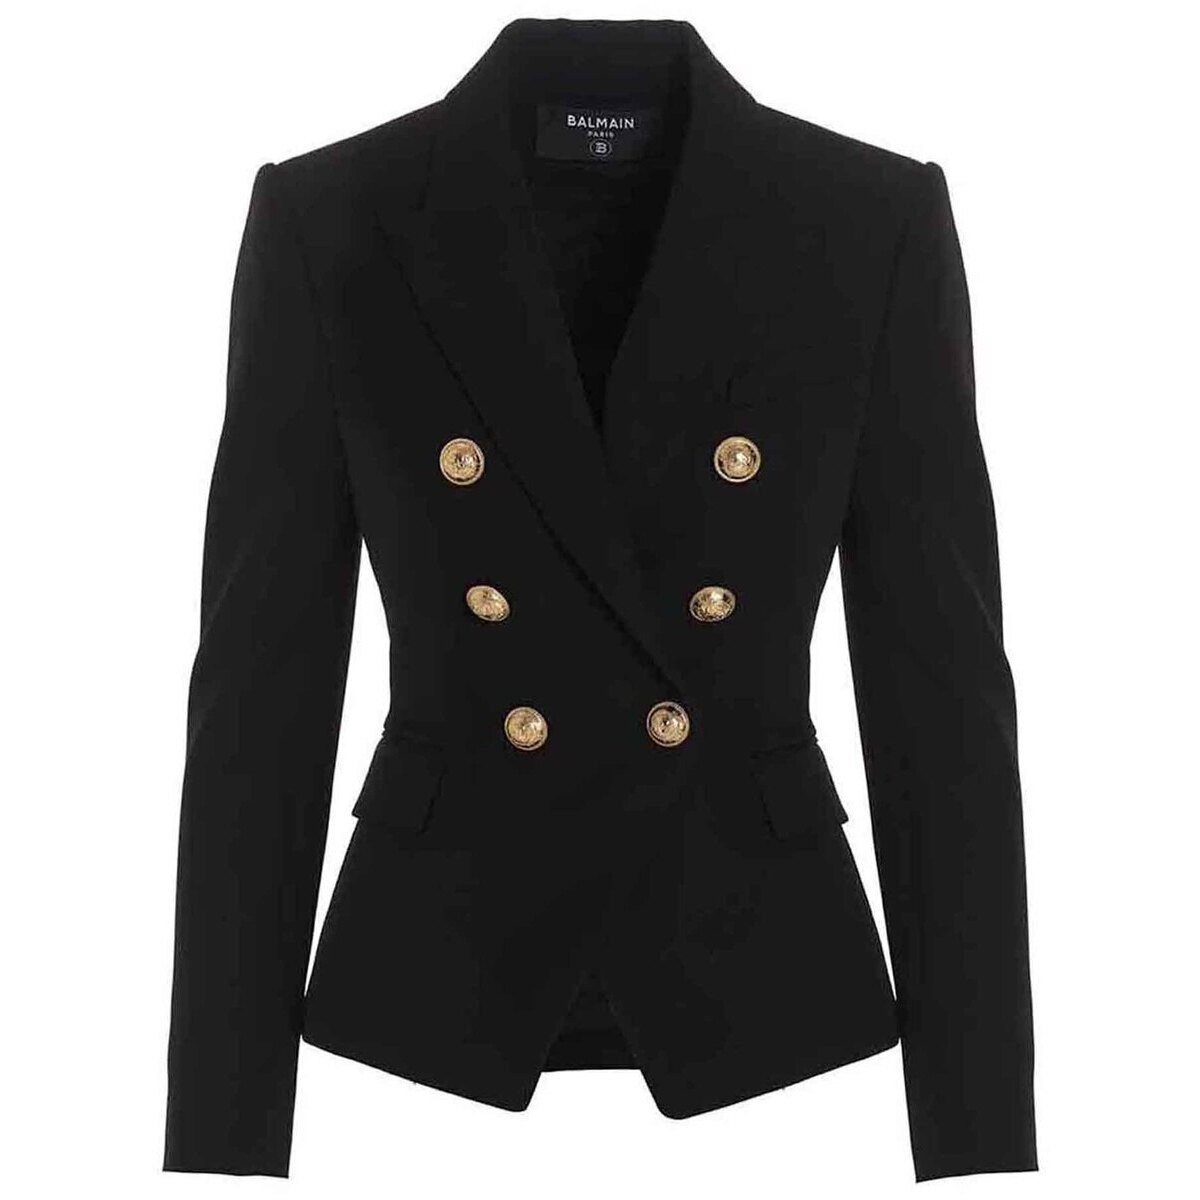 BALMAIN バルマン ブラック Black Double breast blazer jacket with logo buttons ジャケット レディ..